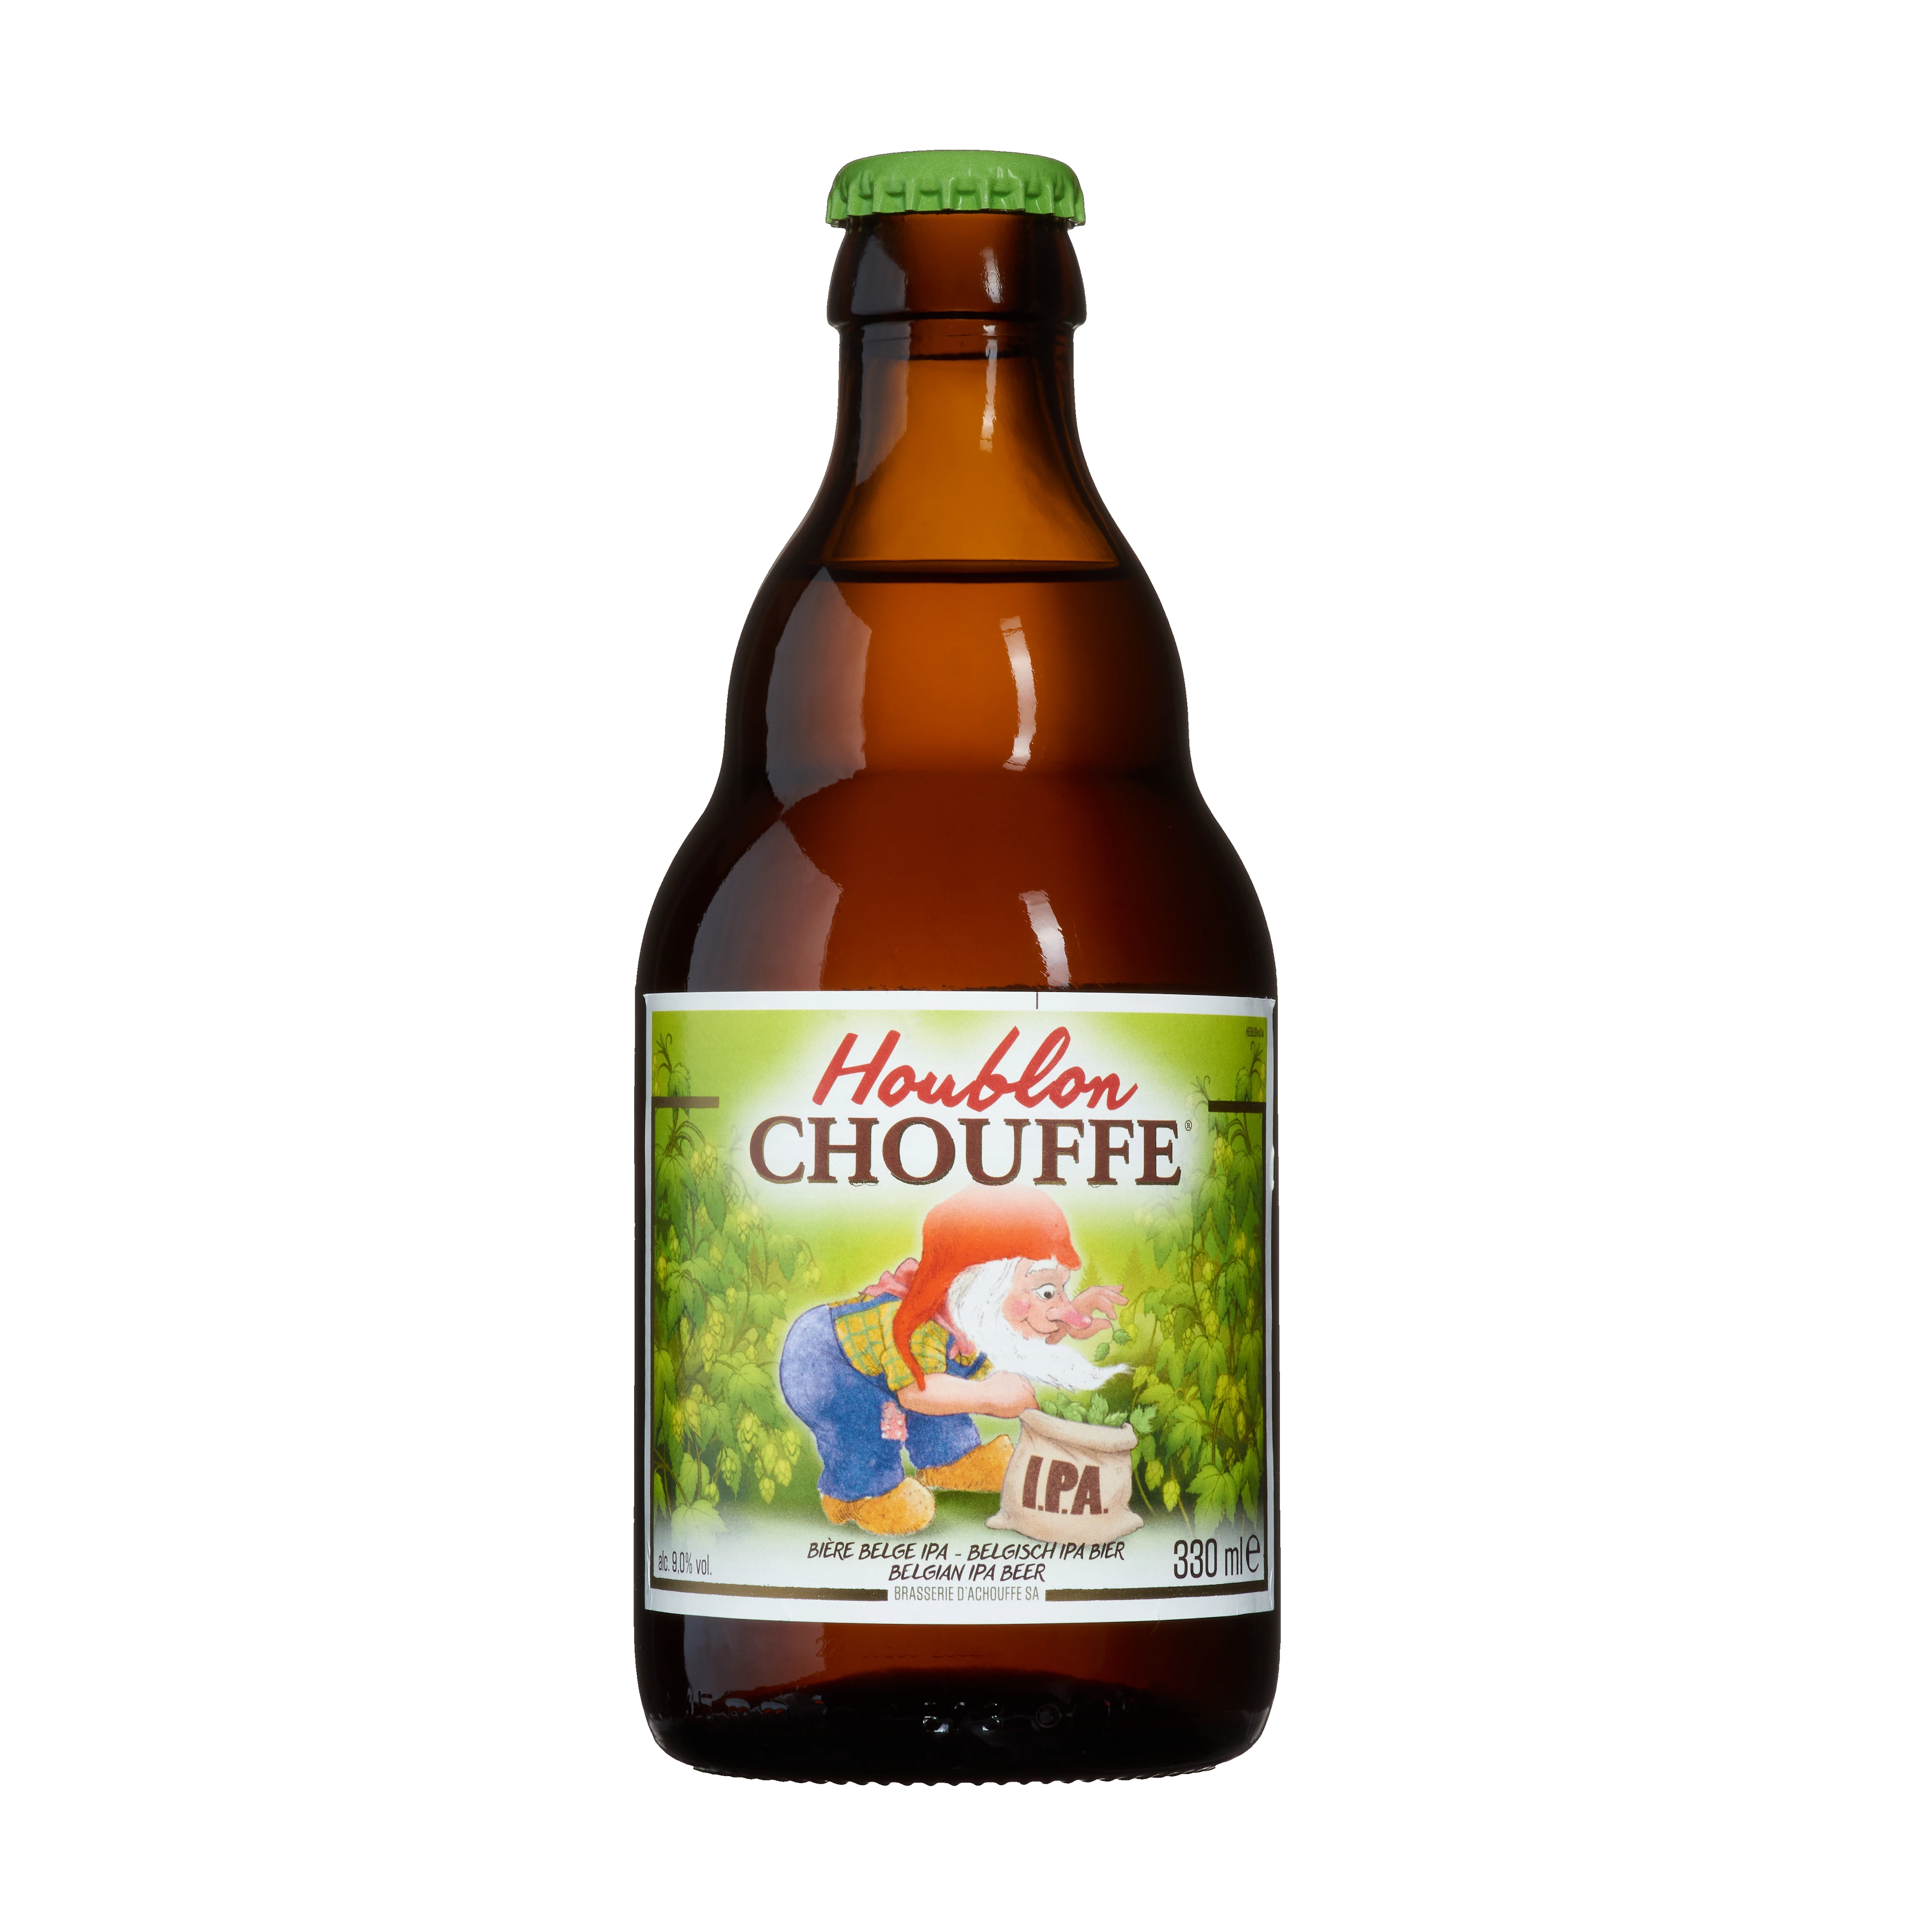 Brasserie d'Achouffe Houblon Chouffe IPA